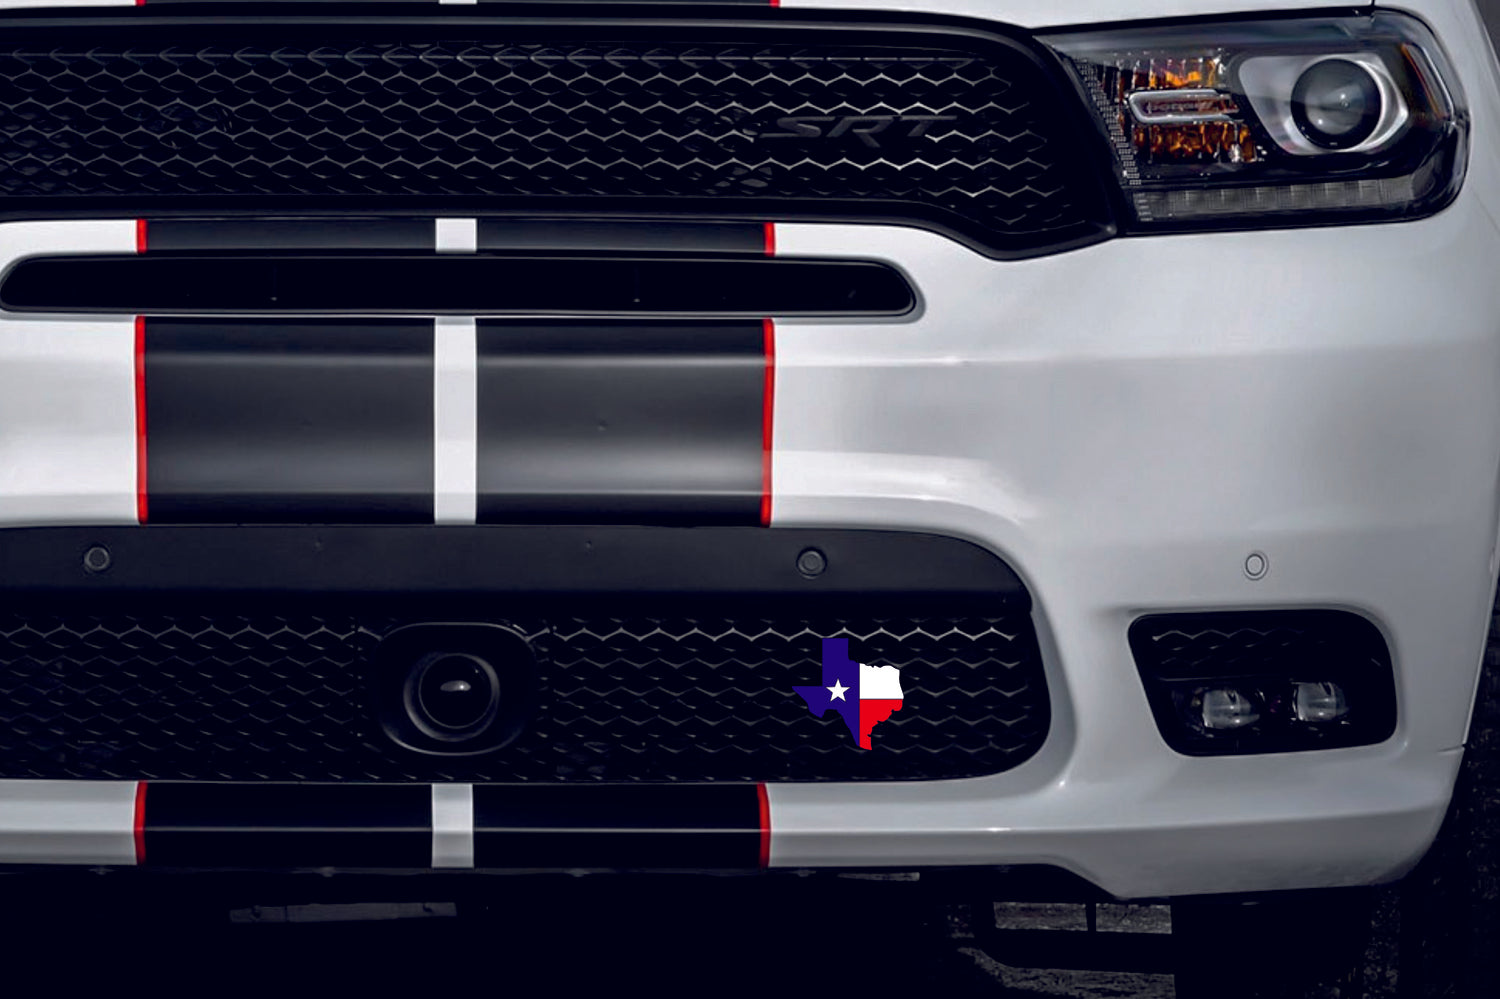 Radiator grille emblem with Texas logo - decoinfabric